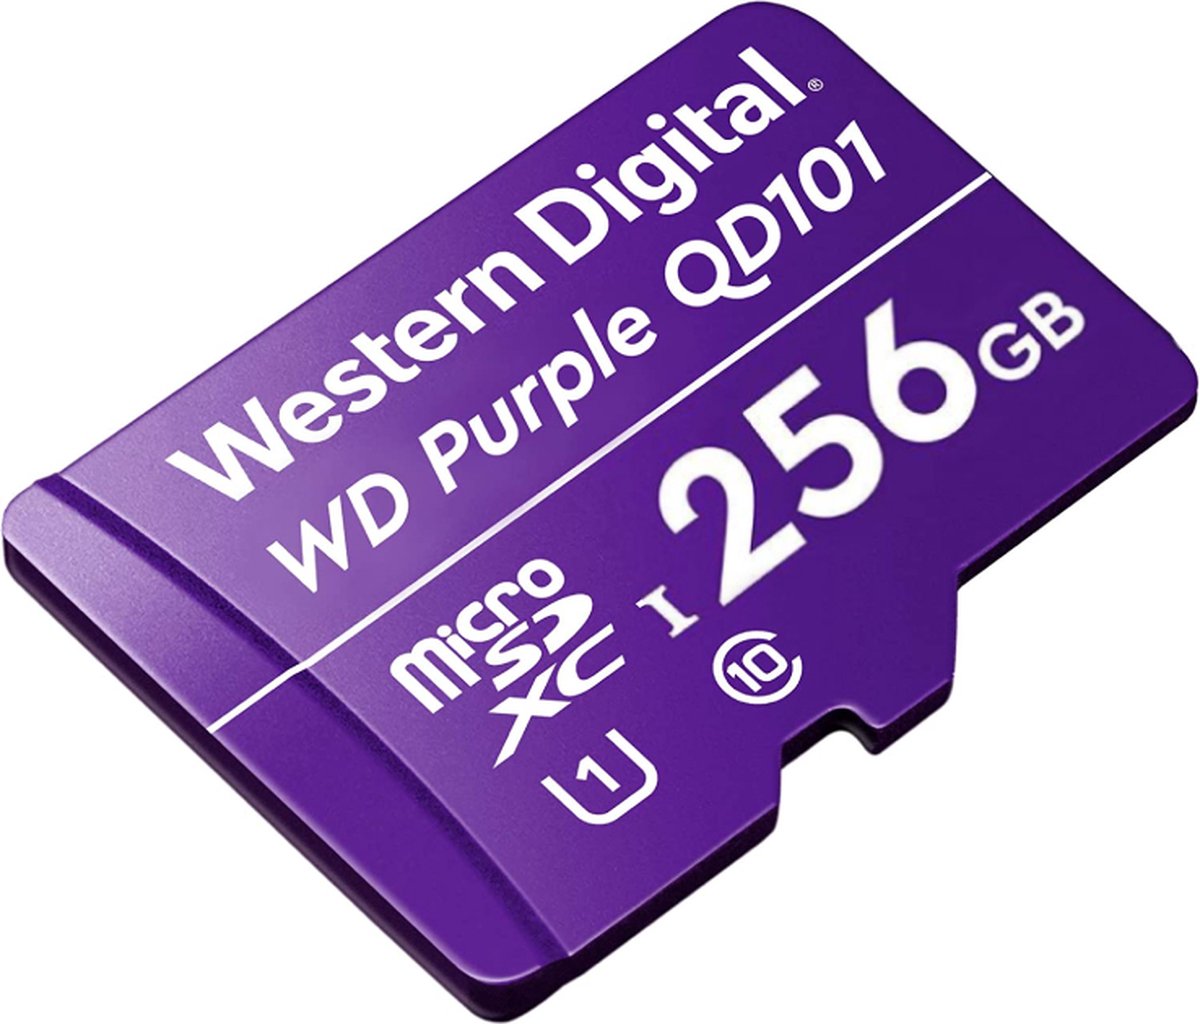 Western Digital WD Purple MicroSDXC 256 GB - Class 10